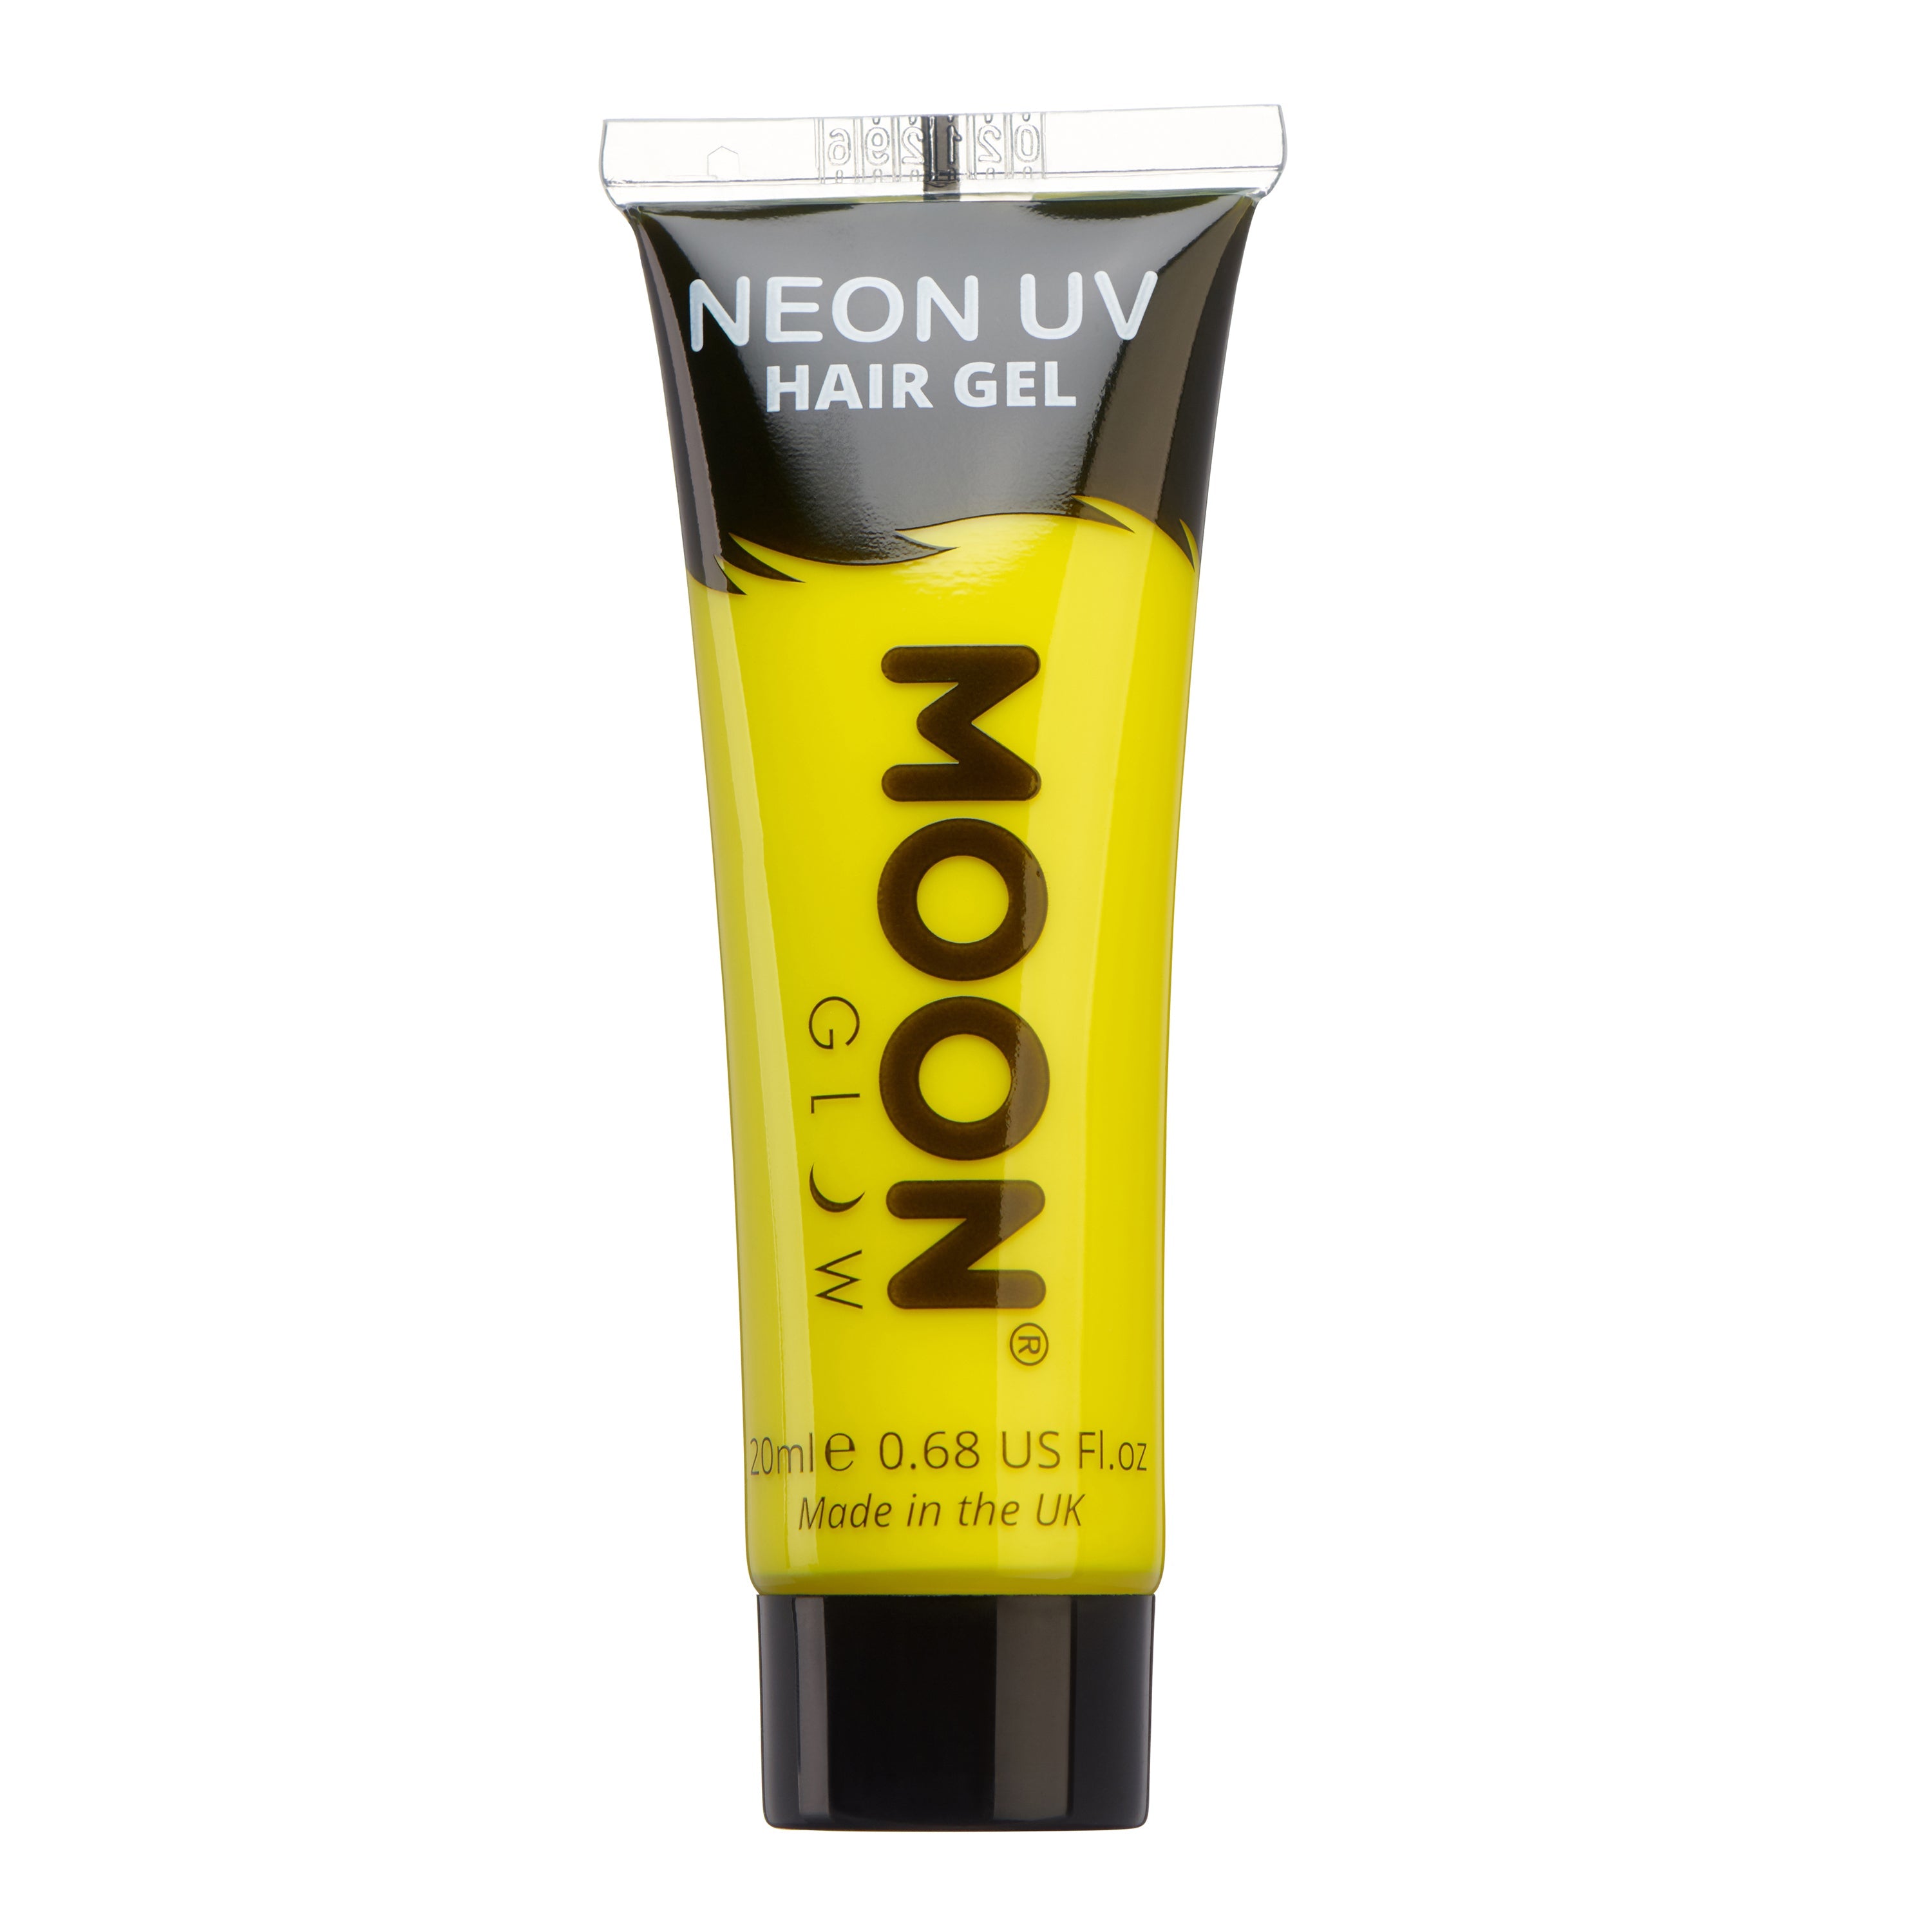 Intense Yellow - Neon UV Glow Blacklight Hair Gel, 20mL. Cosmetically certified, FDA & Health Canada compliant, cruelty free and vegan.